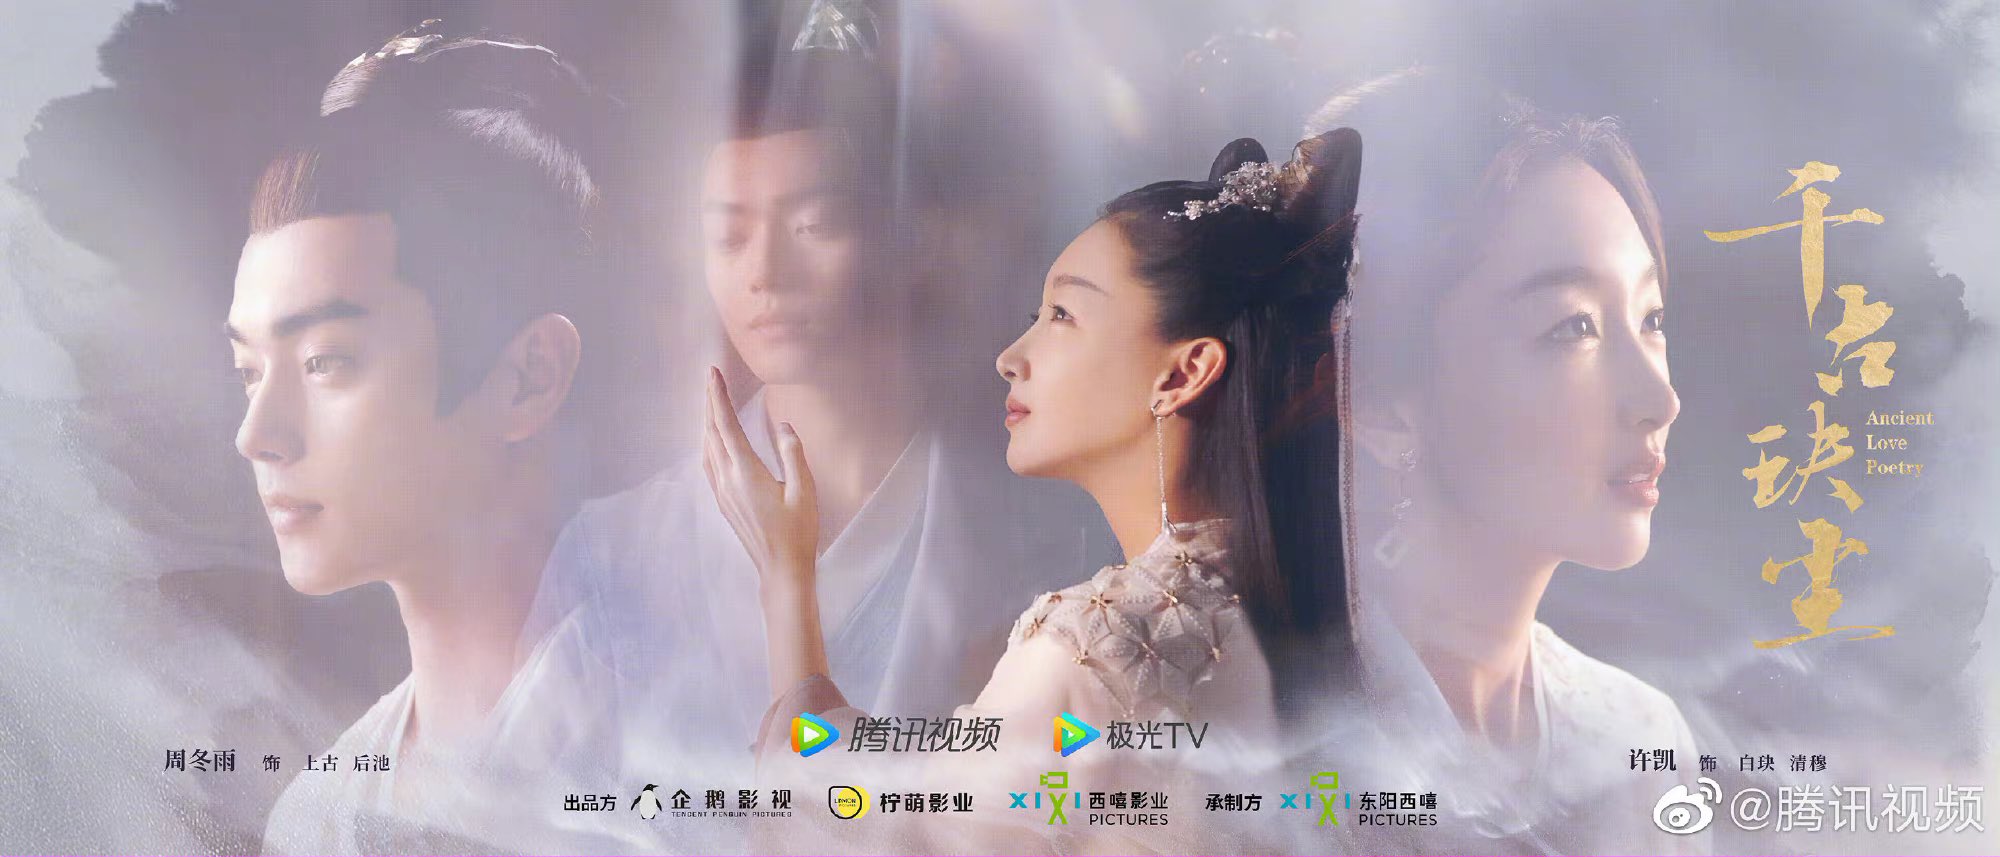 cdrama tweets on X: #AncientLovePoetry shares wedding poster of Zhou Dongyu  and Xu Kai #千古玦尘 / X